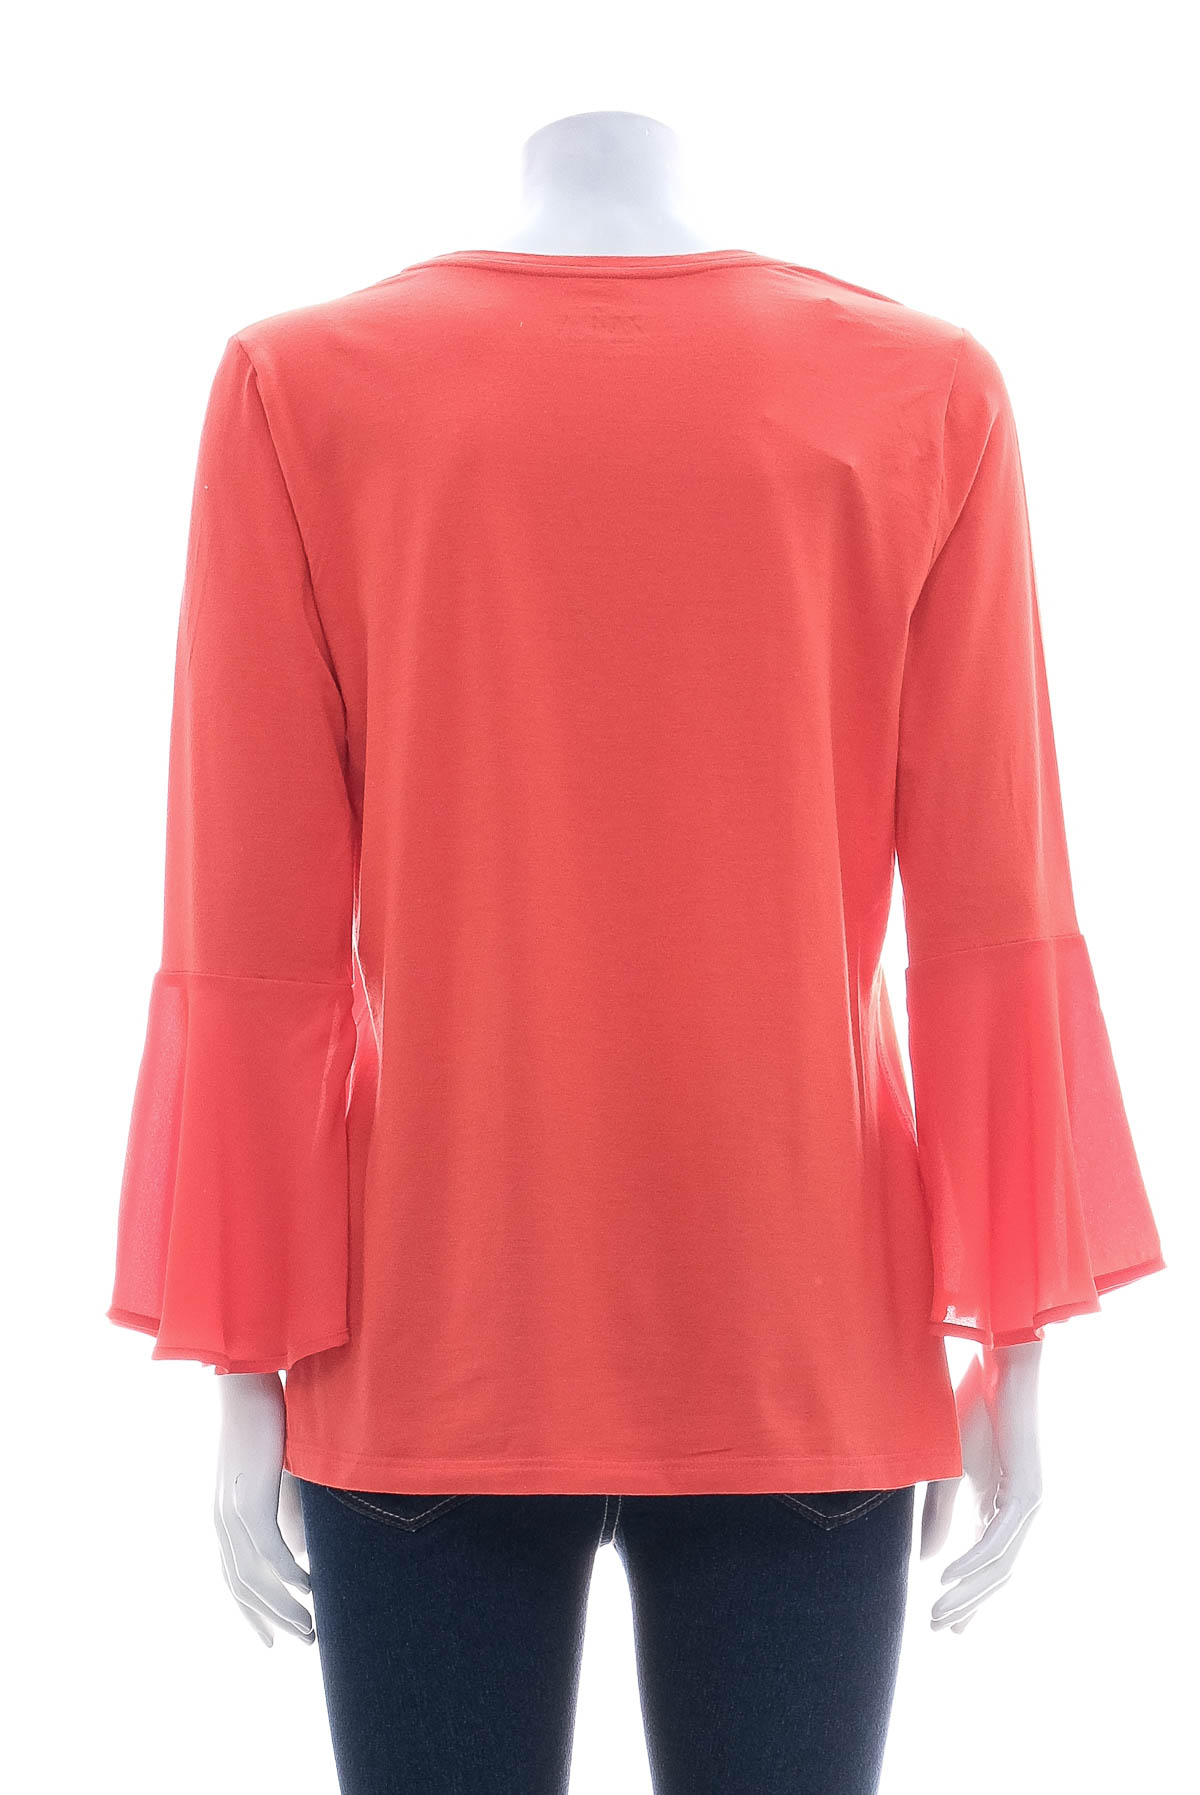 Women's blouse - ZAIDA - 1